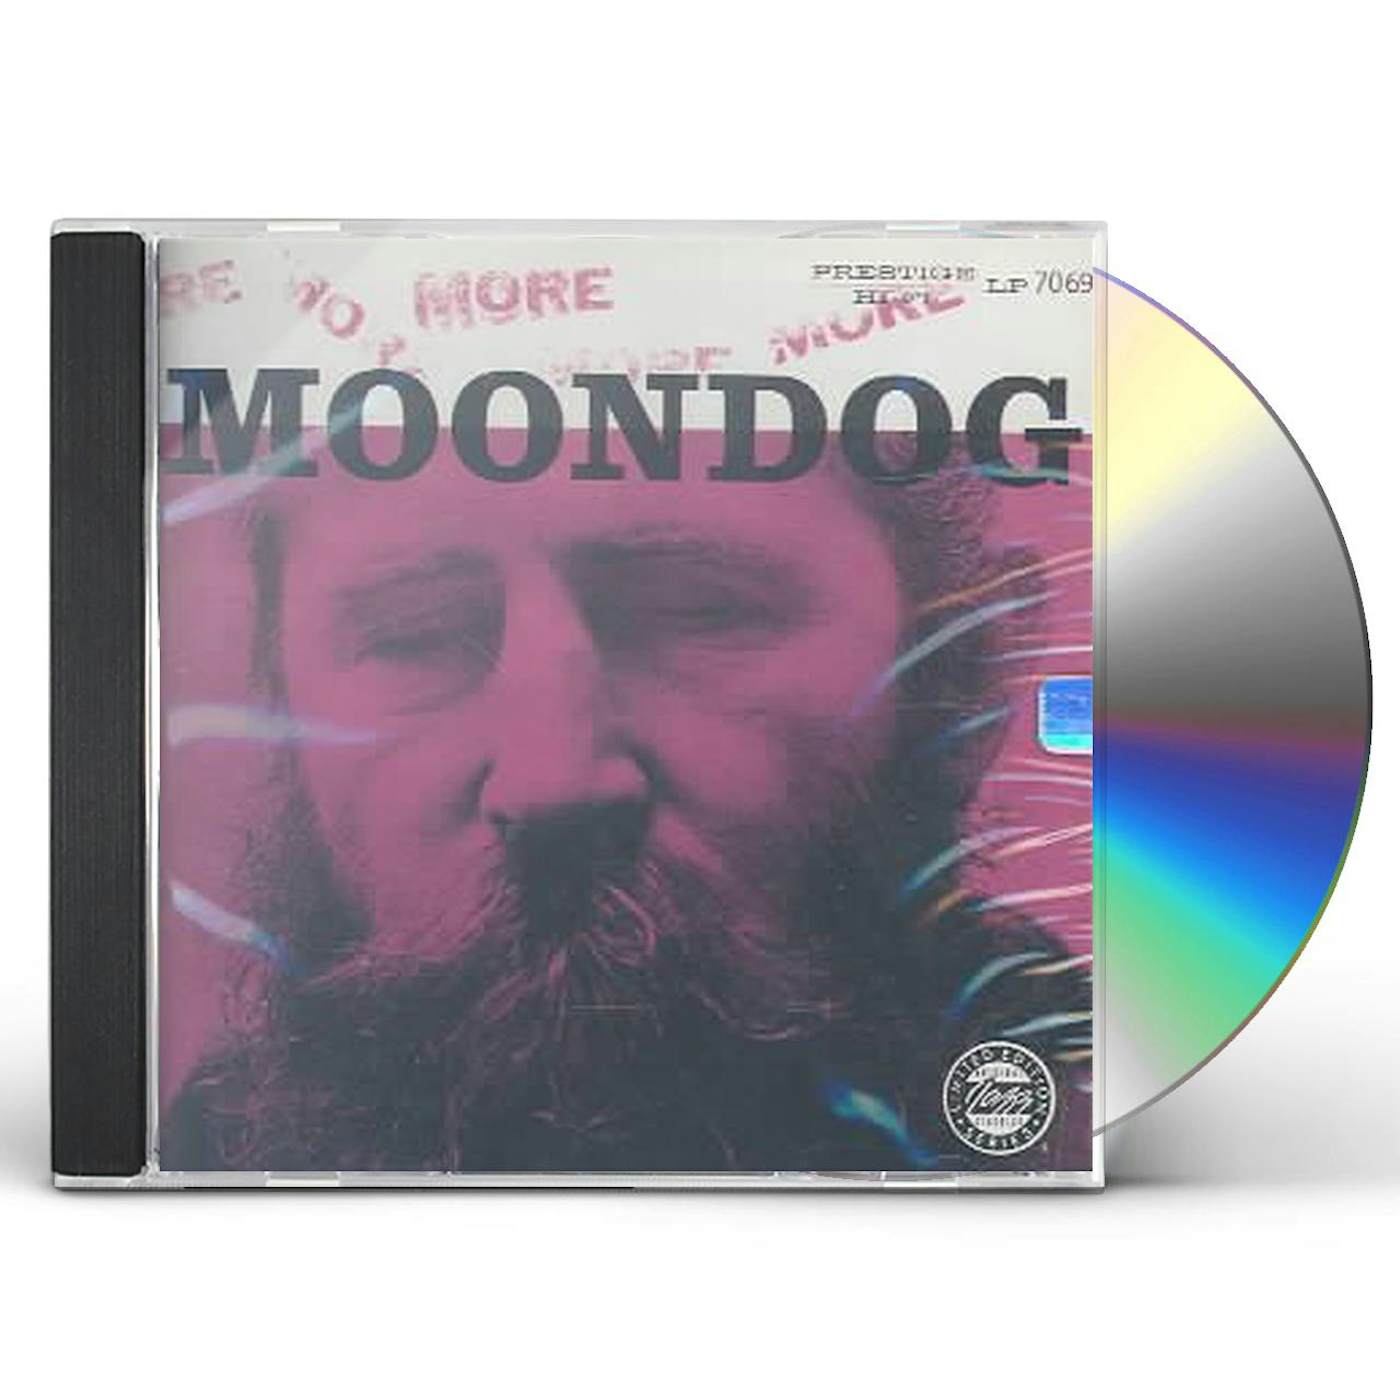 MORE STORY OF MOONDOG CD